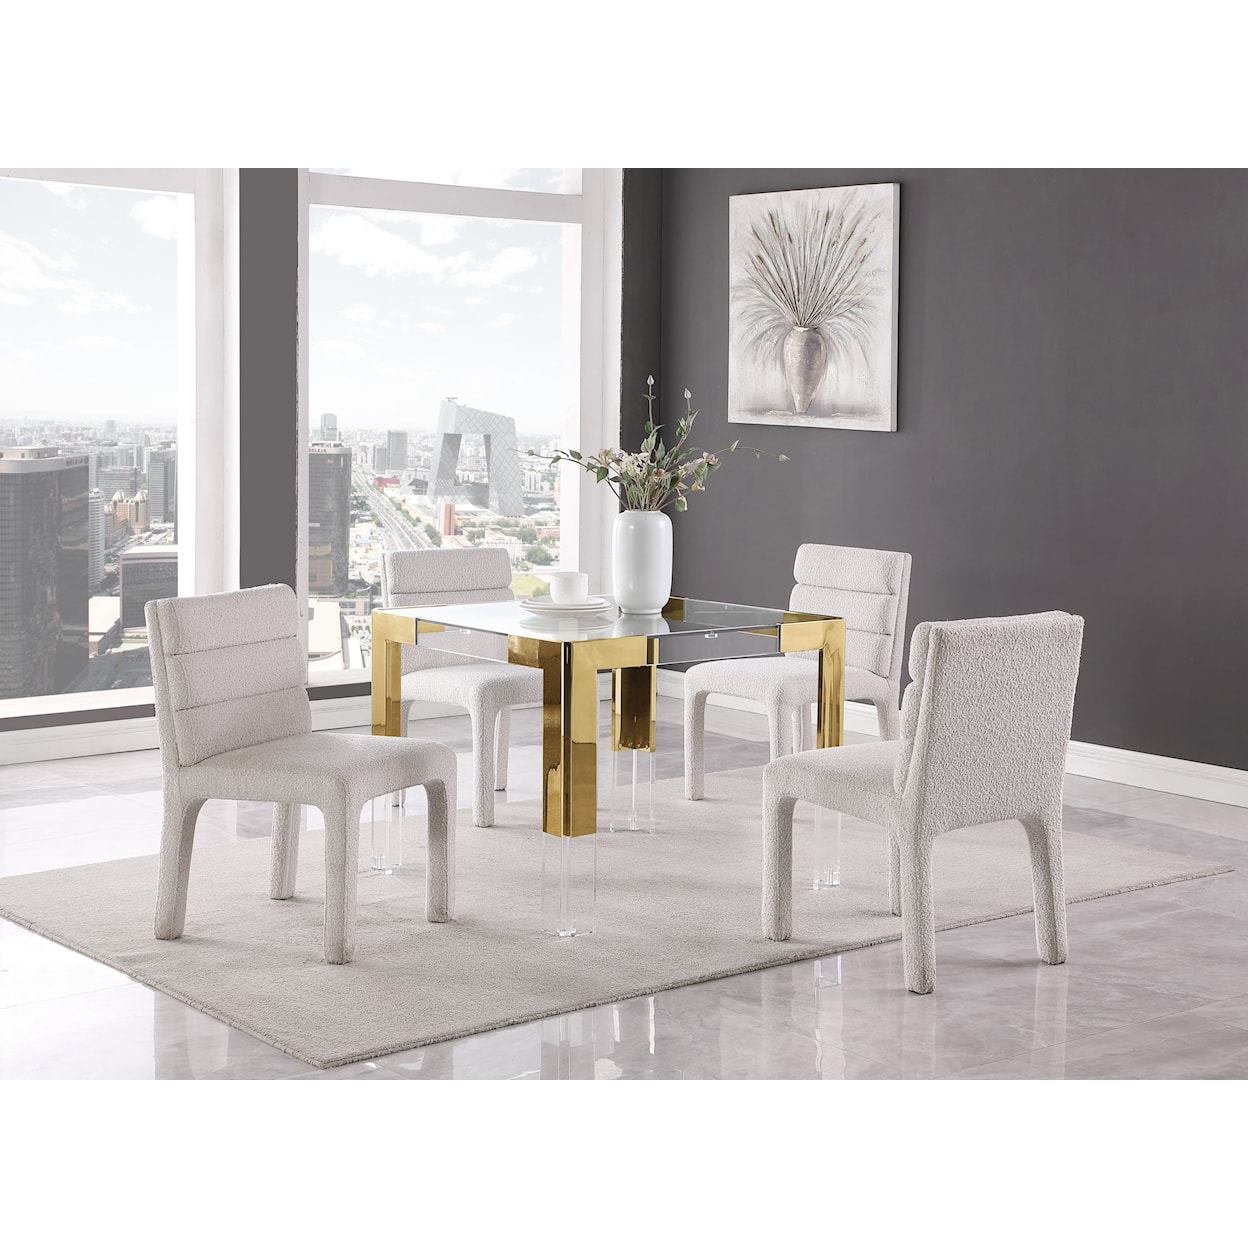 Meridian Furniture Casper Dining Table